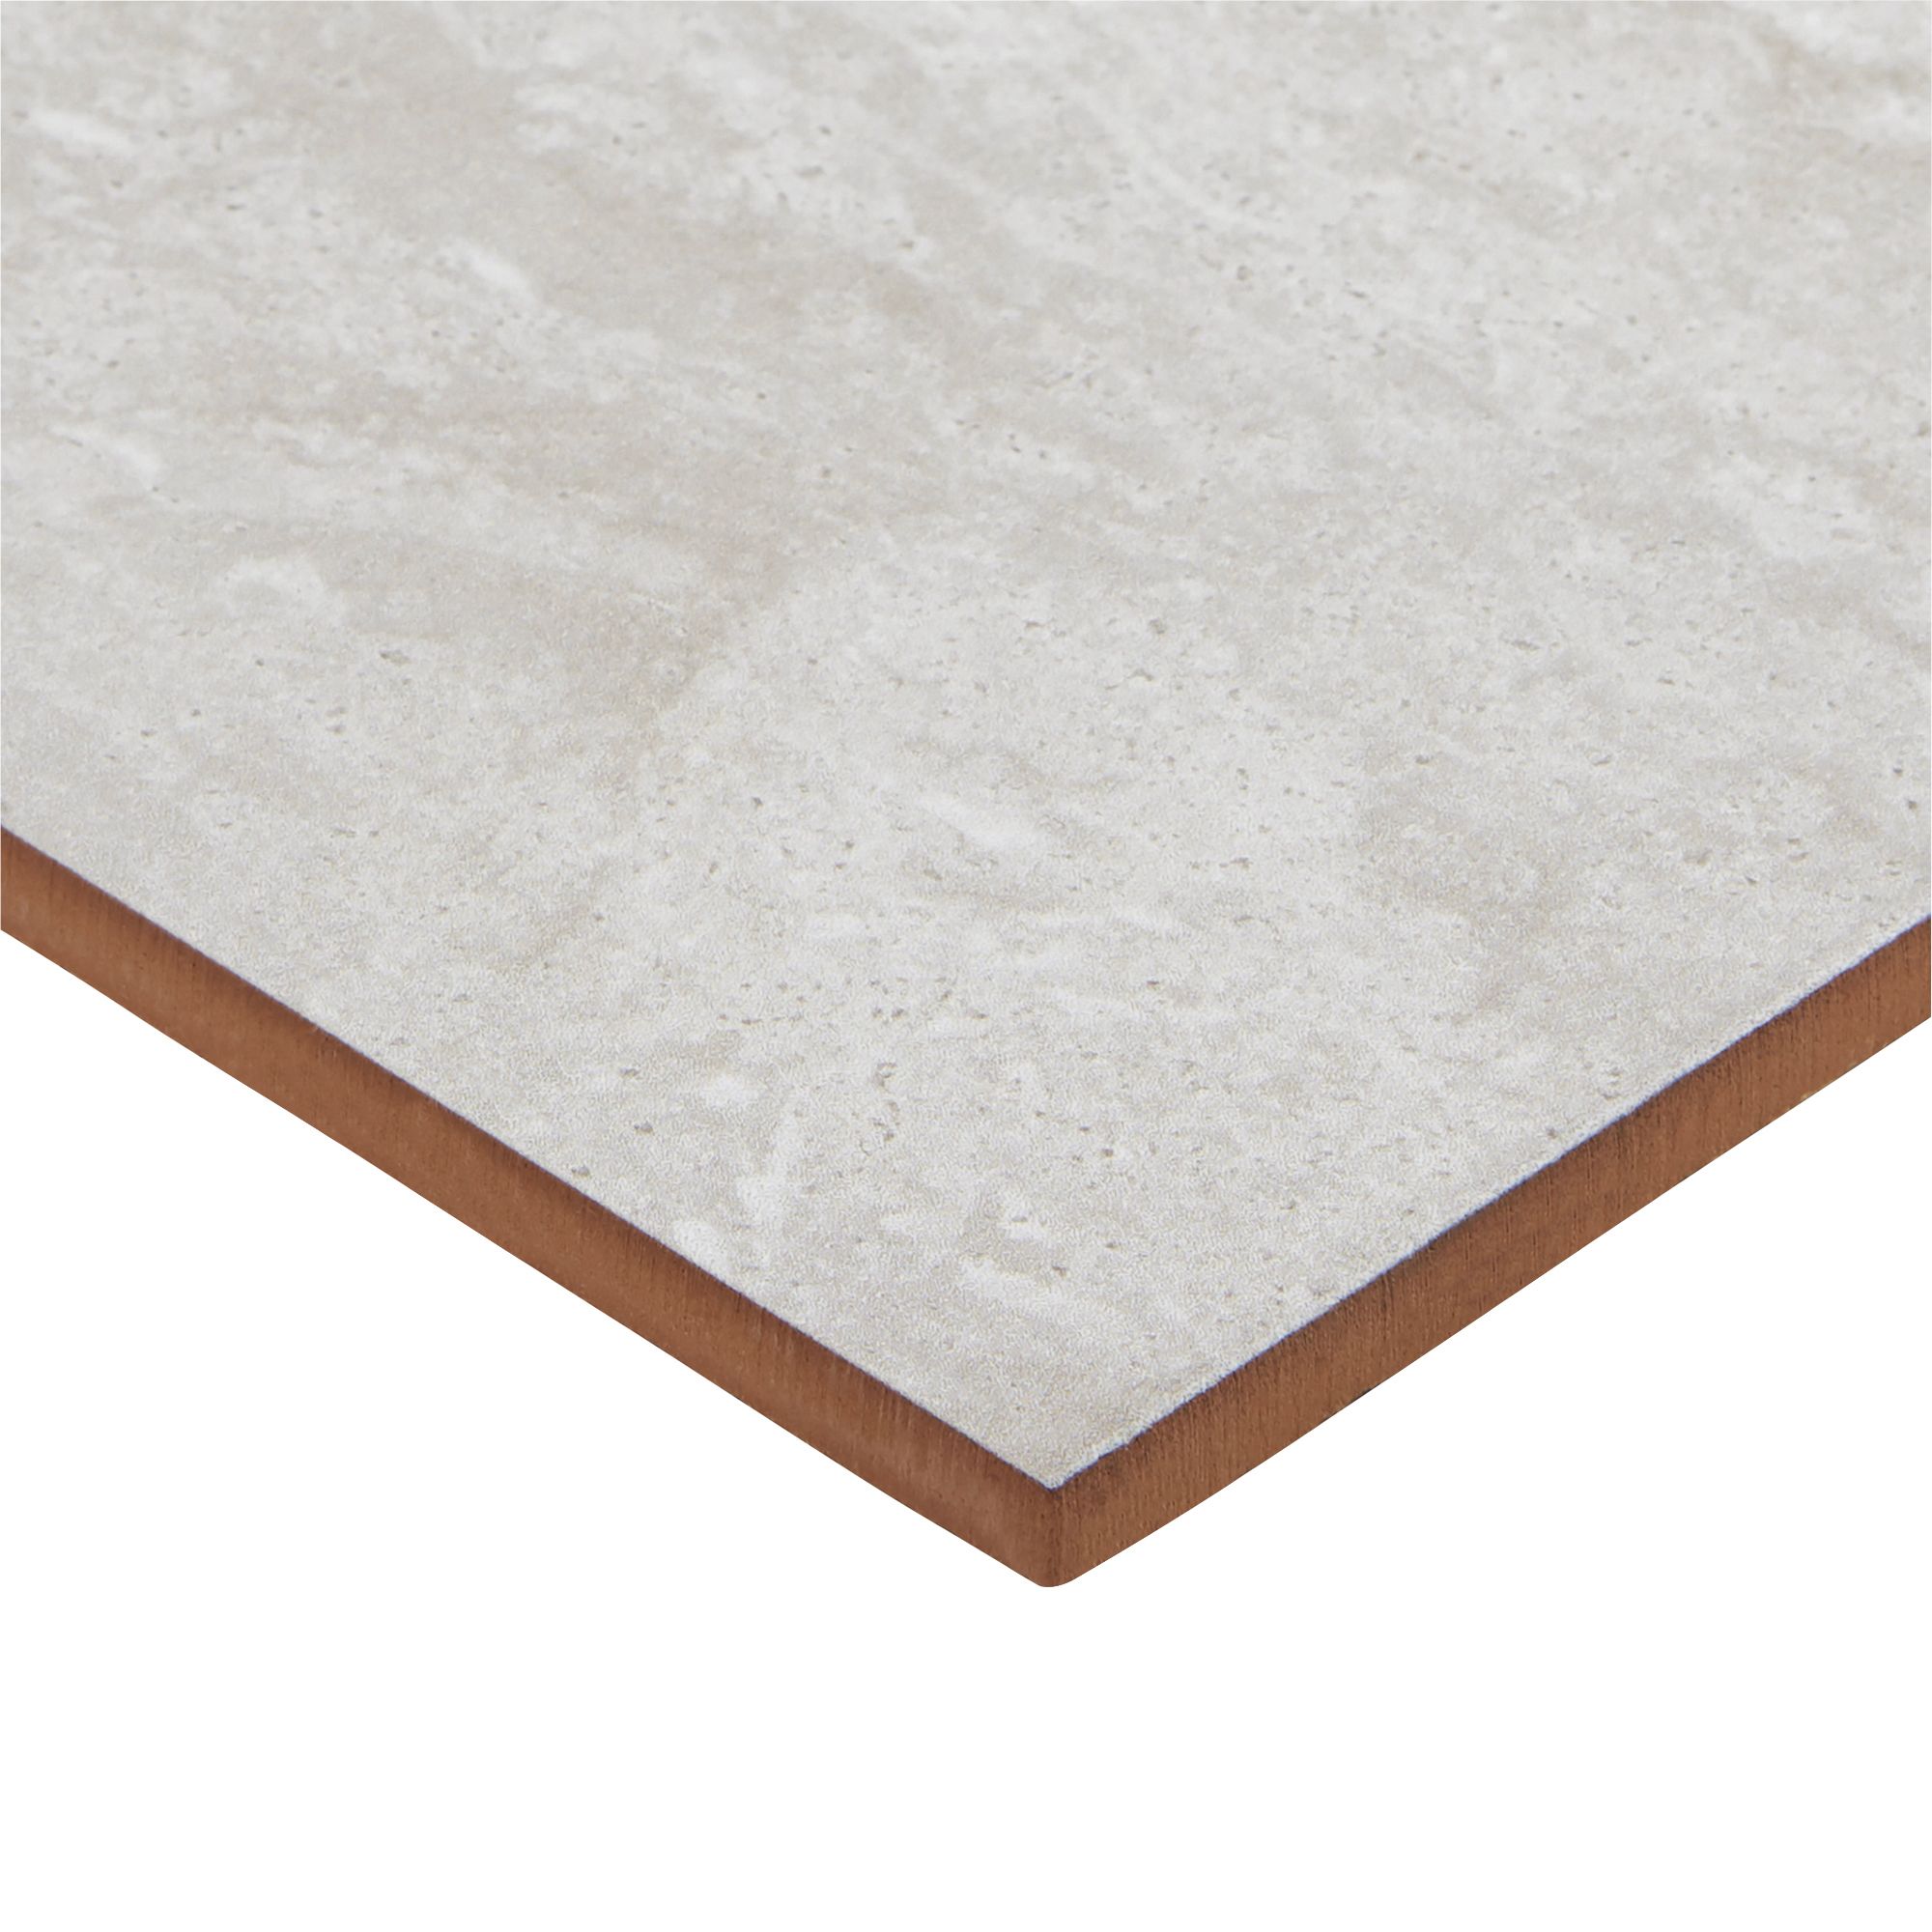 Soft travertin Light grey Gloss Stone effect Ceramic Indoor Tile, Pack of 9, (L)600mm (W)200mm